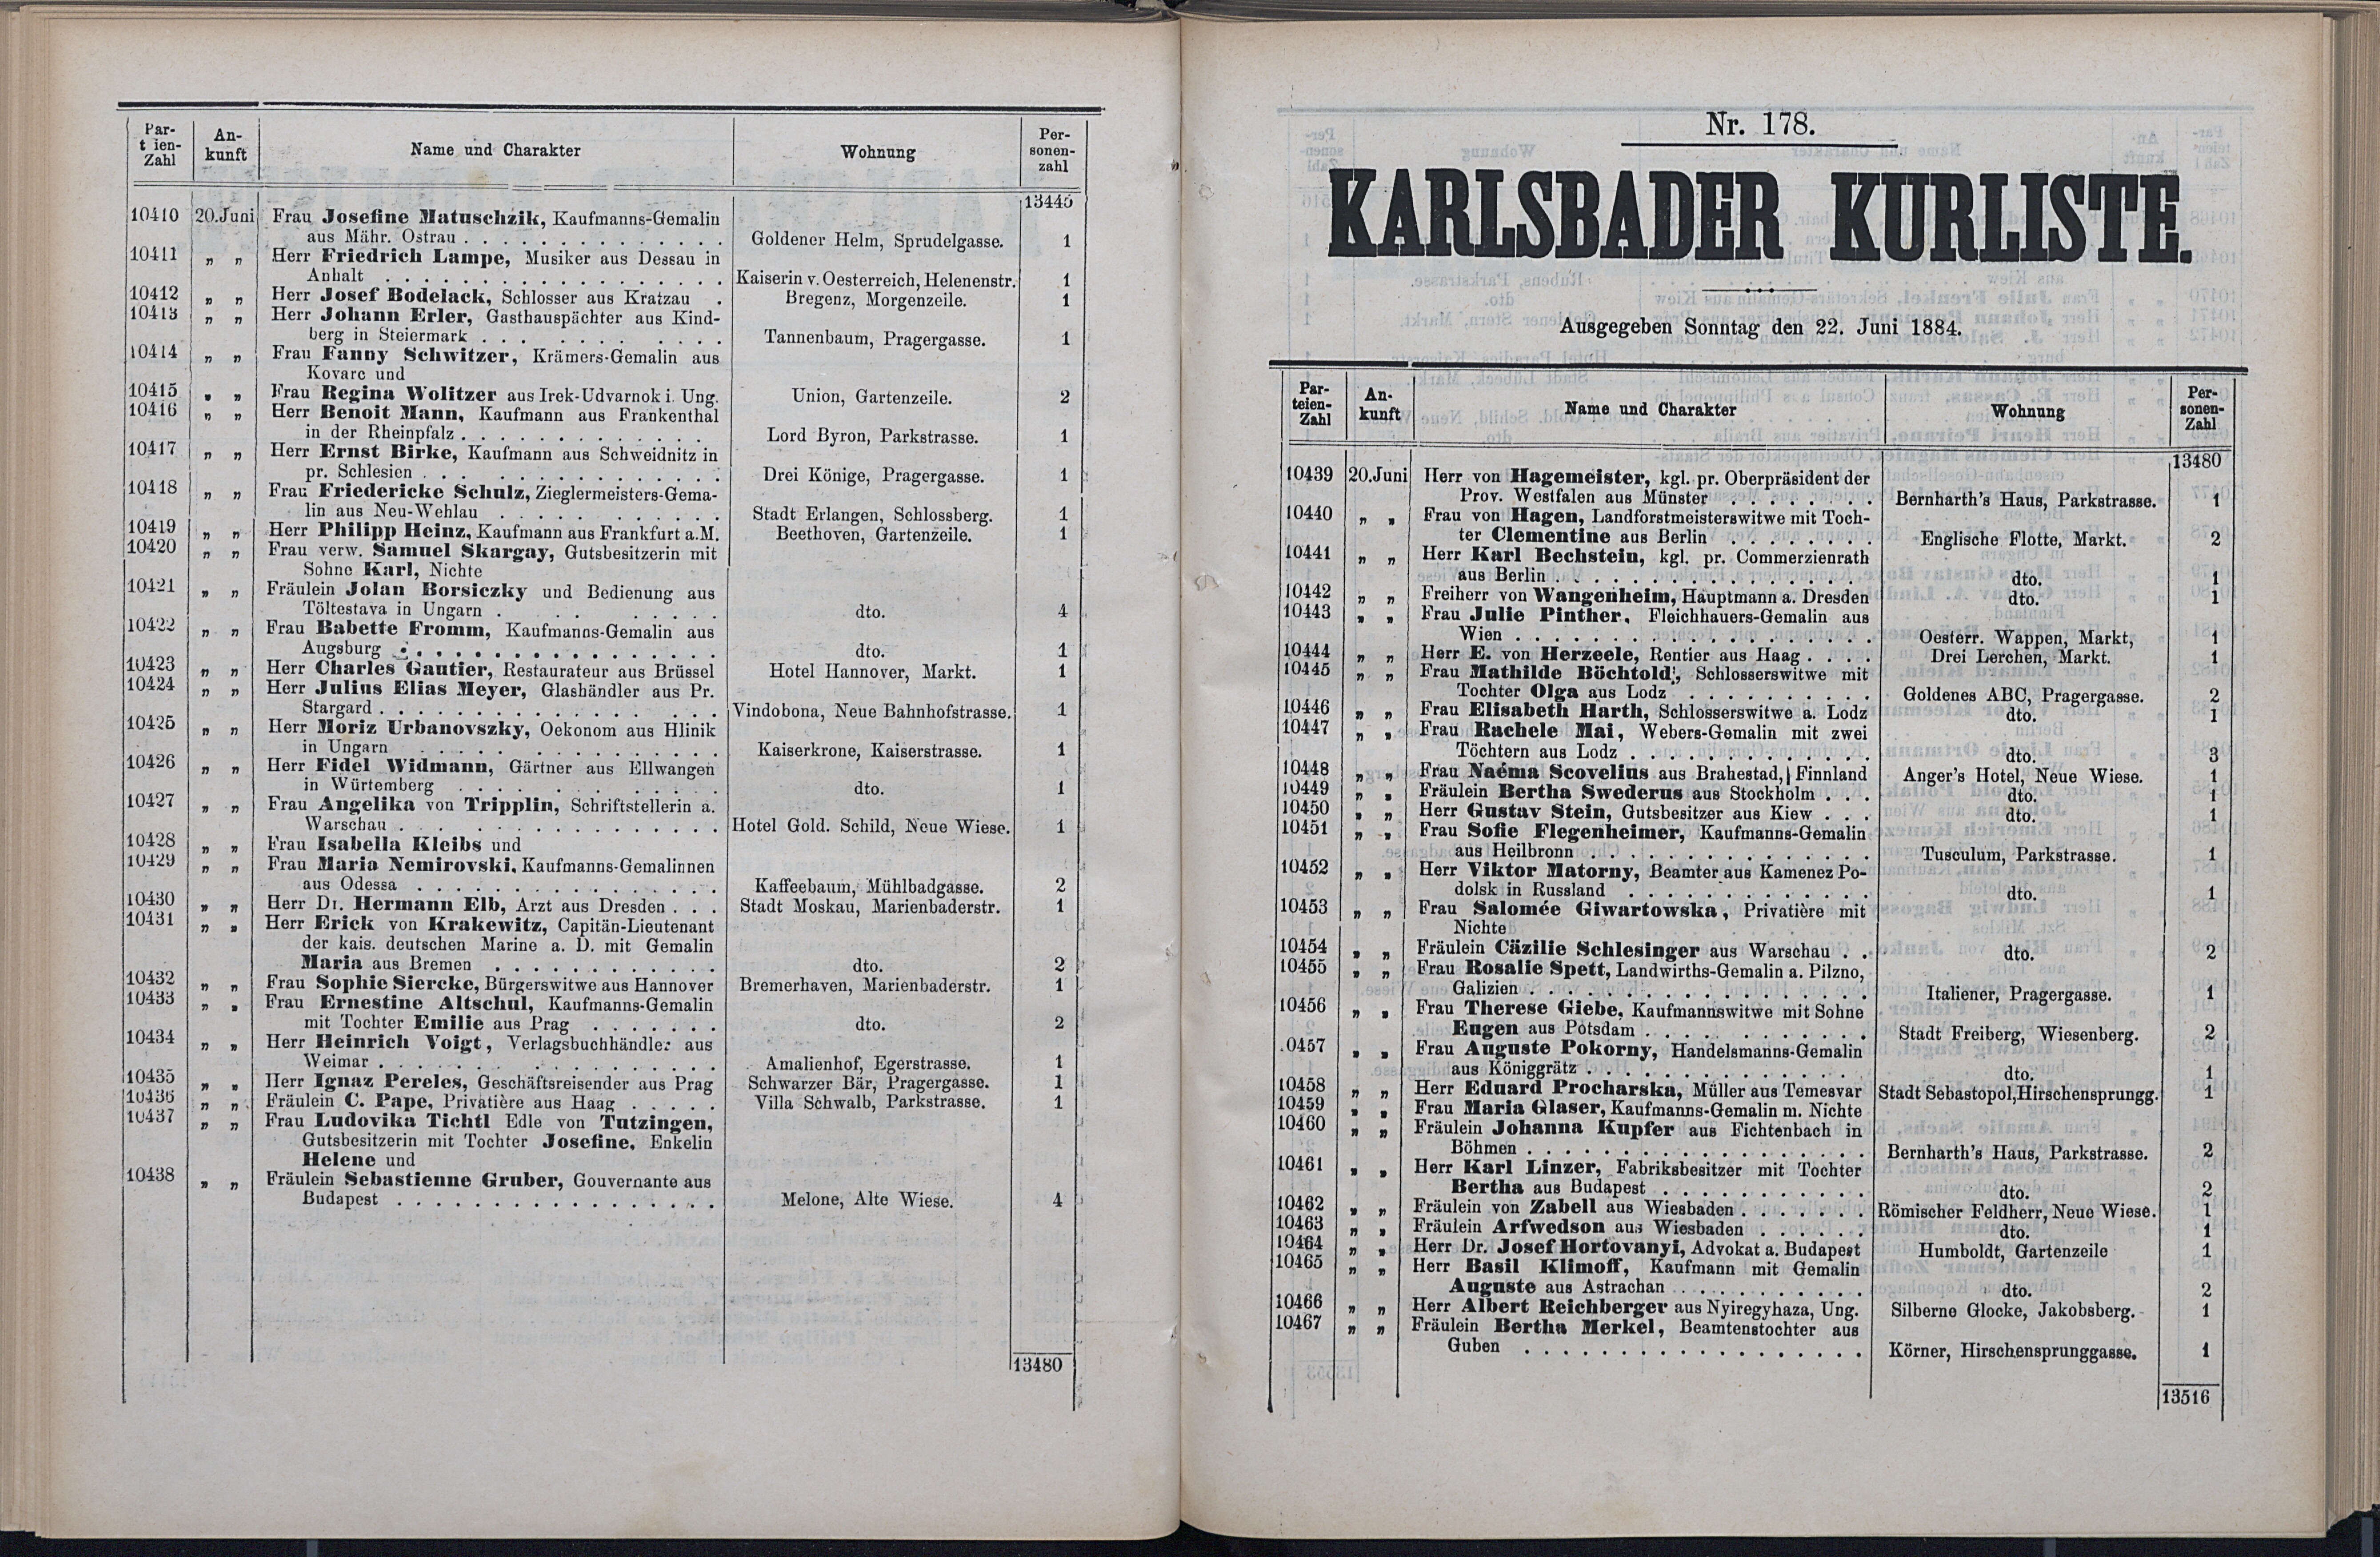 195. soap-kv_knihovna_karlsbader-kurliste-1884_1960